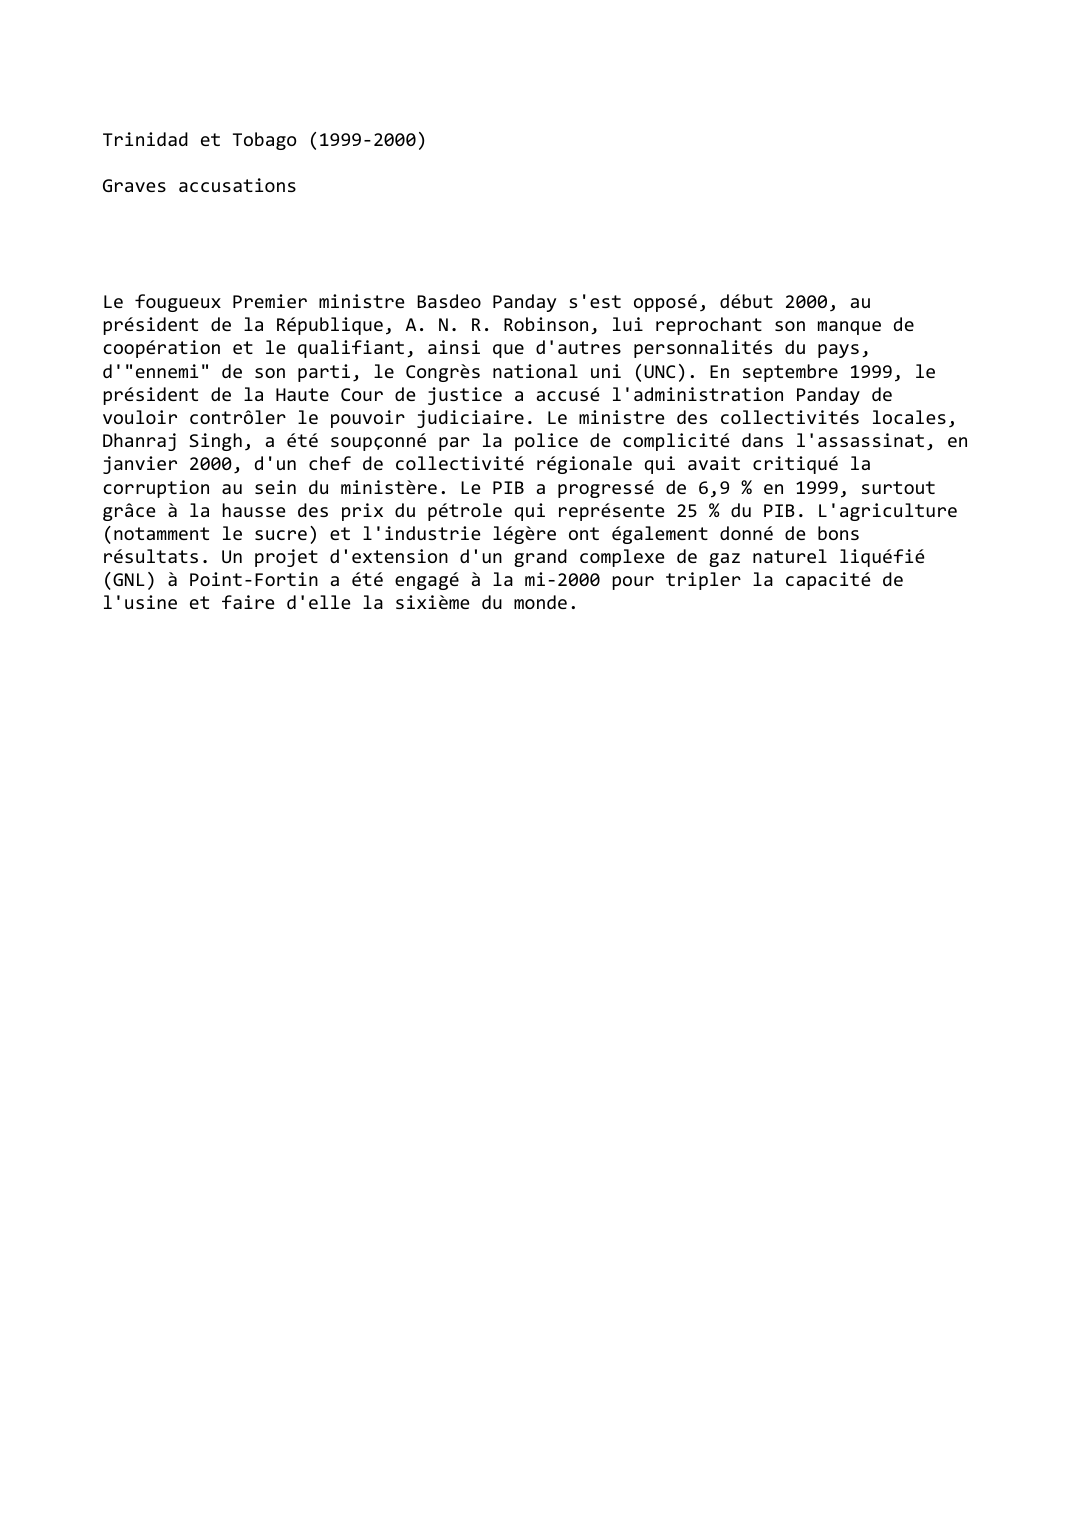 Prévisualisation du document Trinidad et Tobago (1999-2000)

Graves accusations